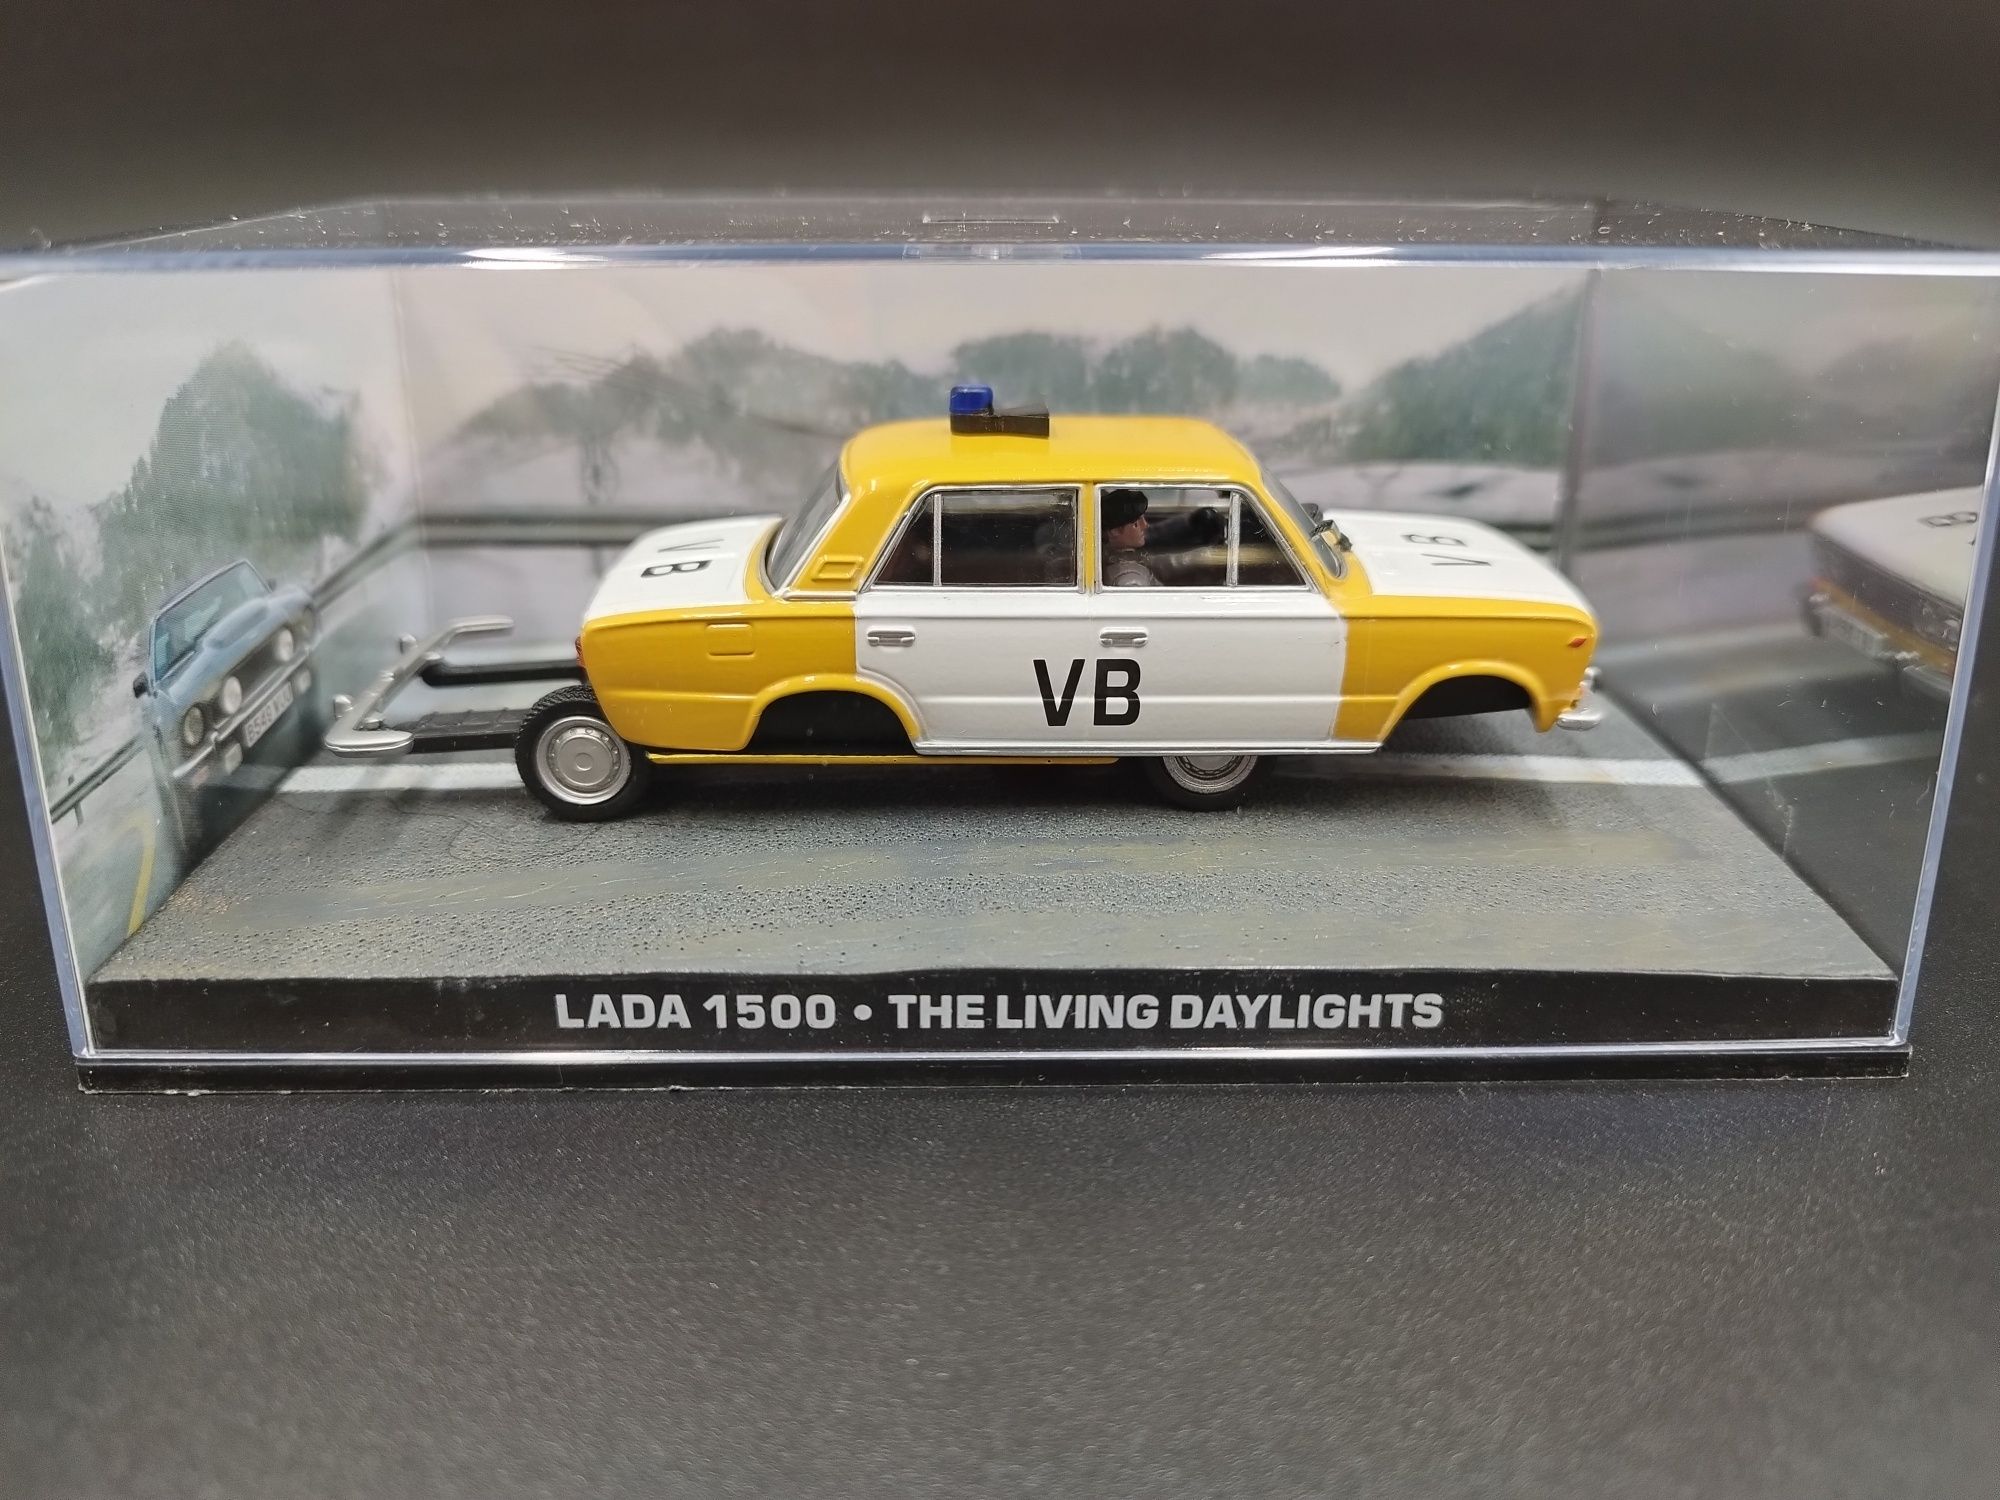 1:43 Altaya 1980 Lada 1500 James Bond 007 "The Living Daylights" model